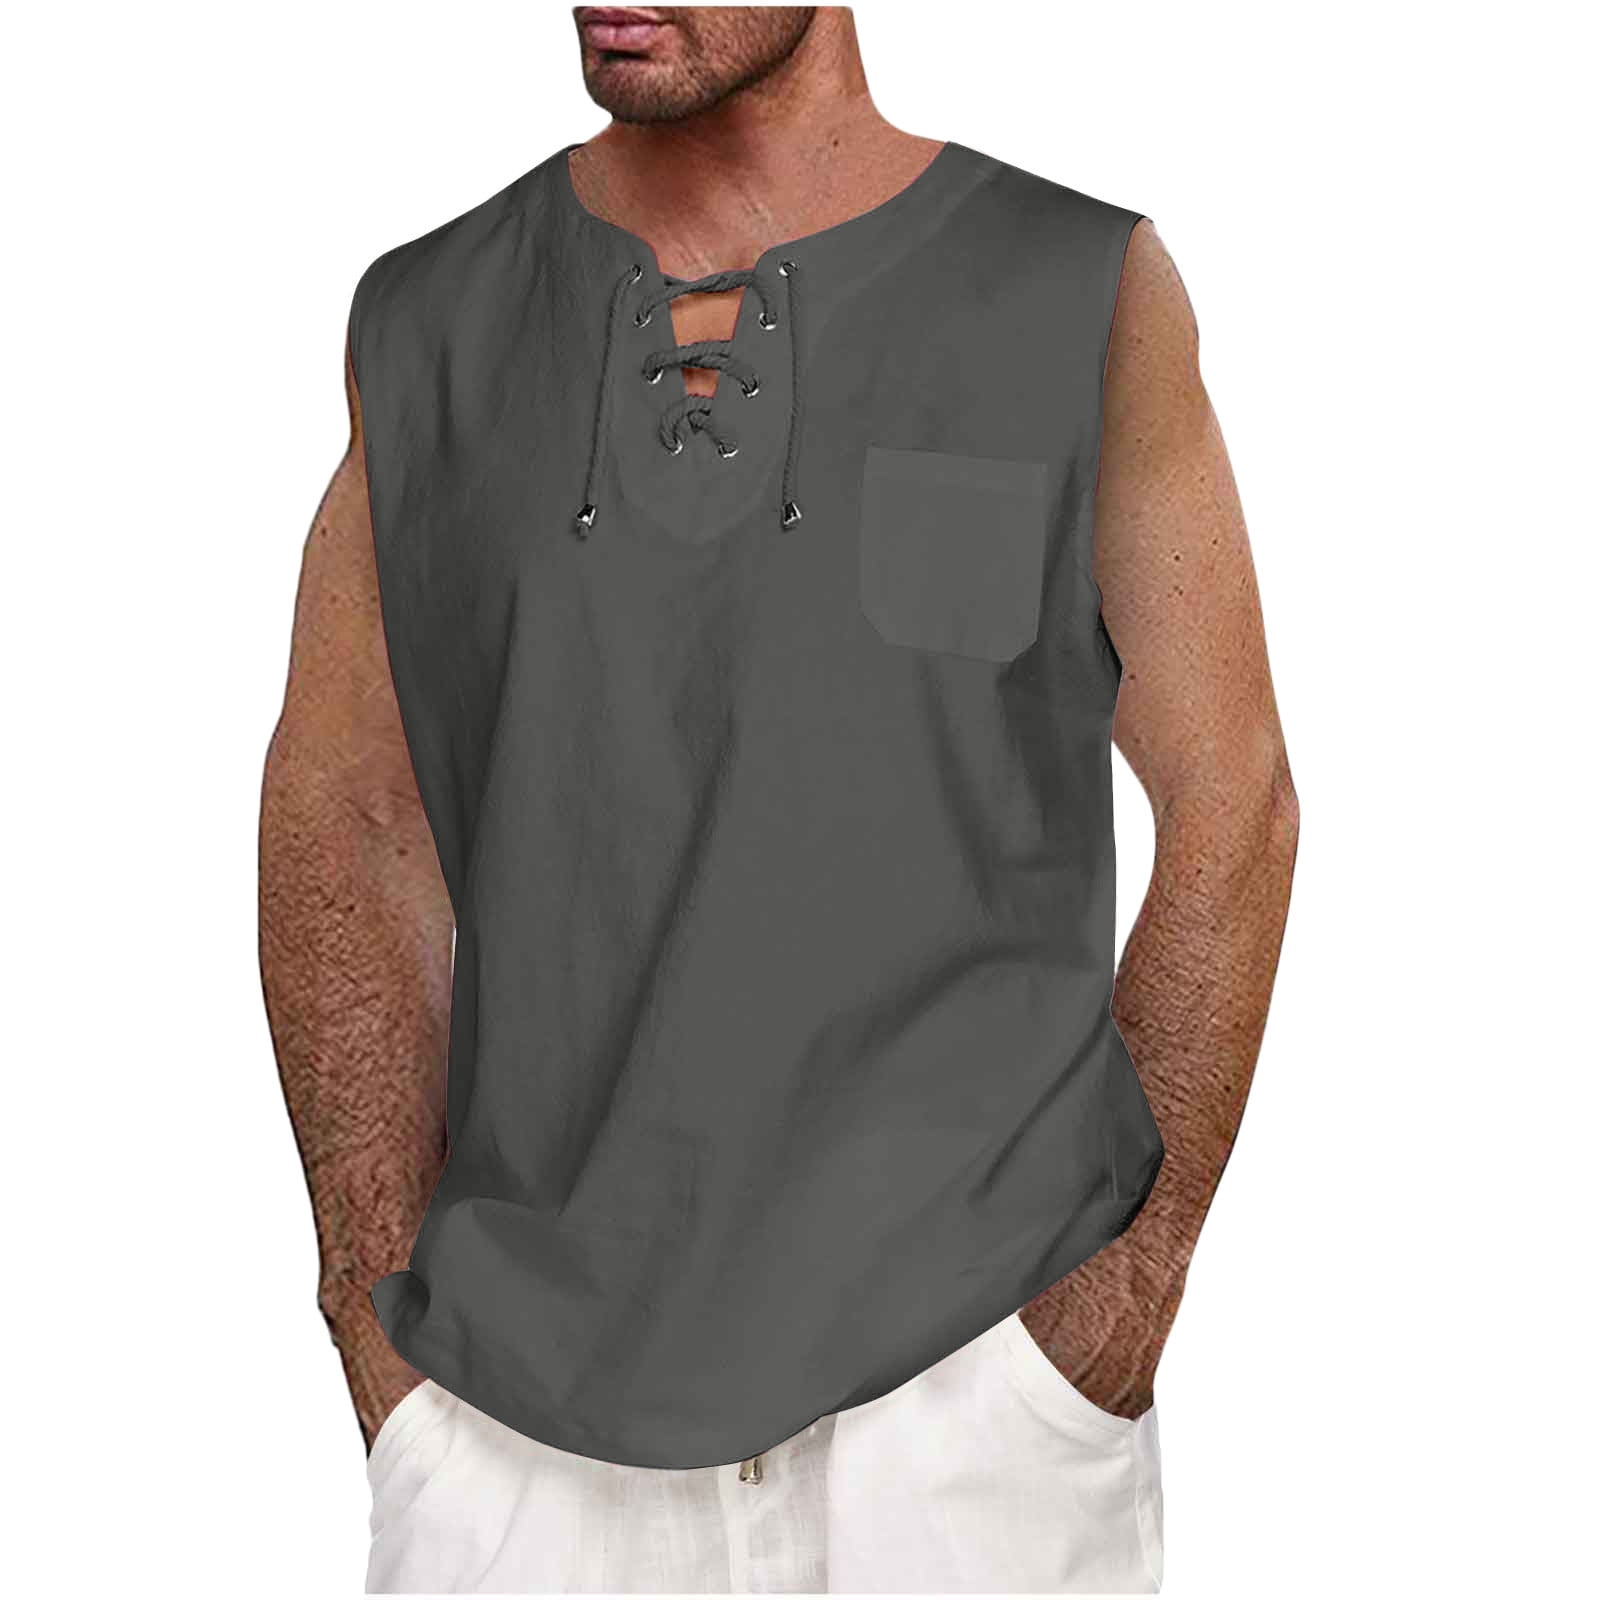 RYRJJ Men's Cotton Linen Tank Top Shirts Casual Stylish Mens Shirts ...